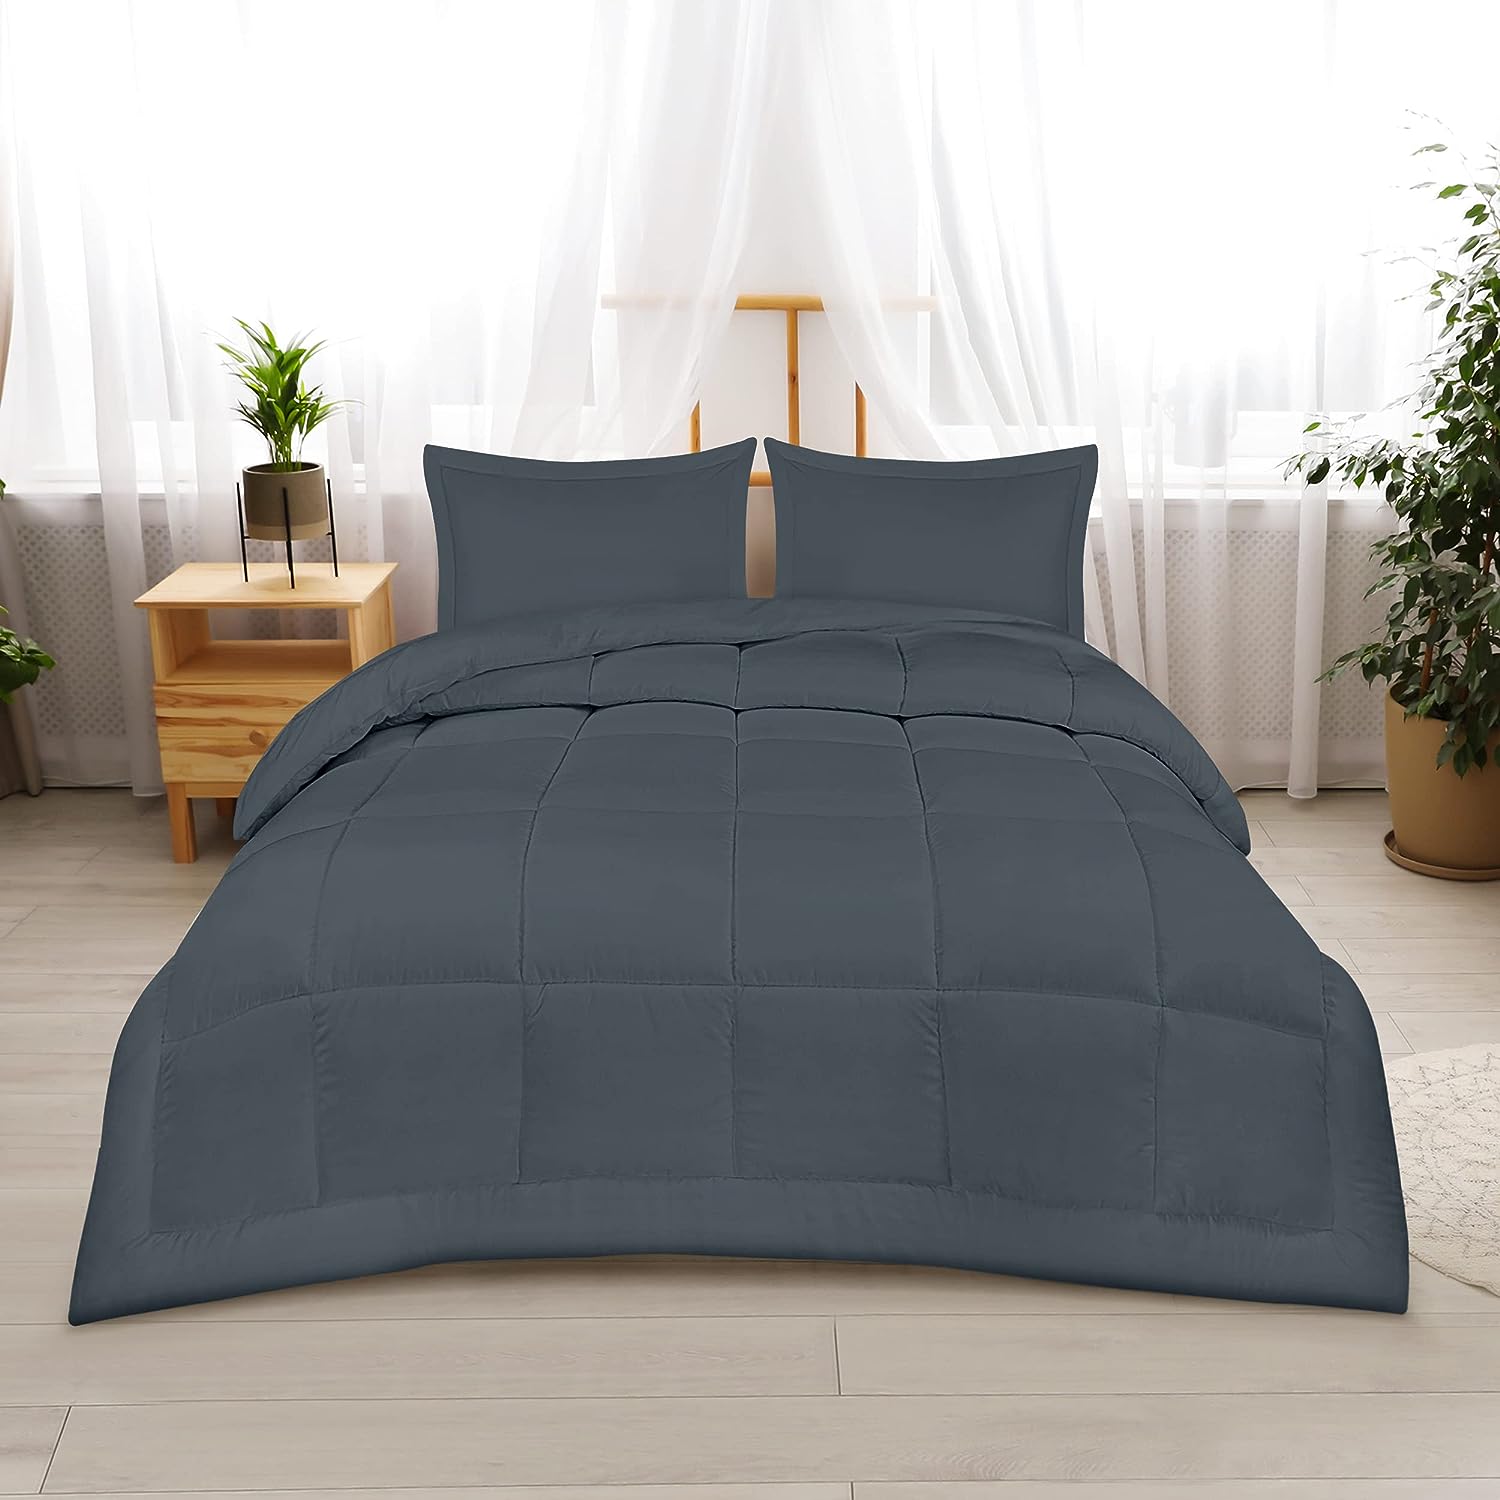 Utopia Bedding Duvet Cover Queen Size Set - 1 Duvet Cover with 2 Pillow  Shams 